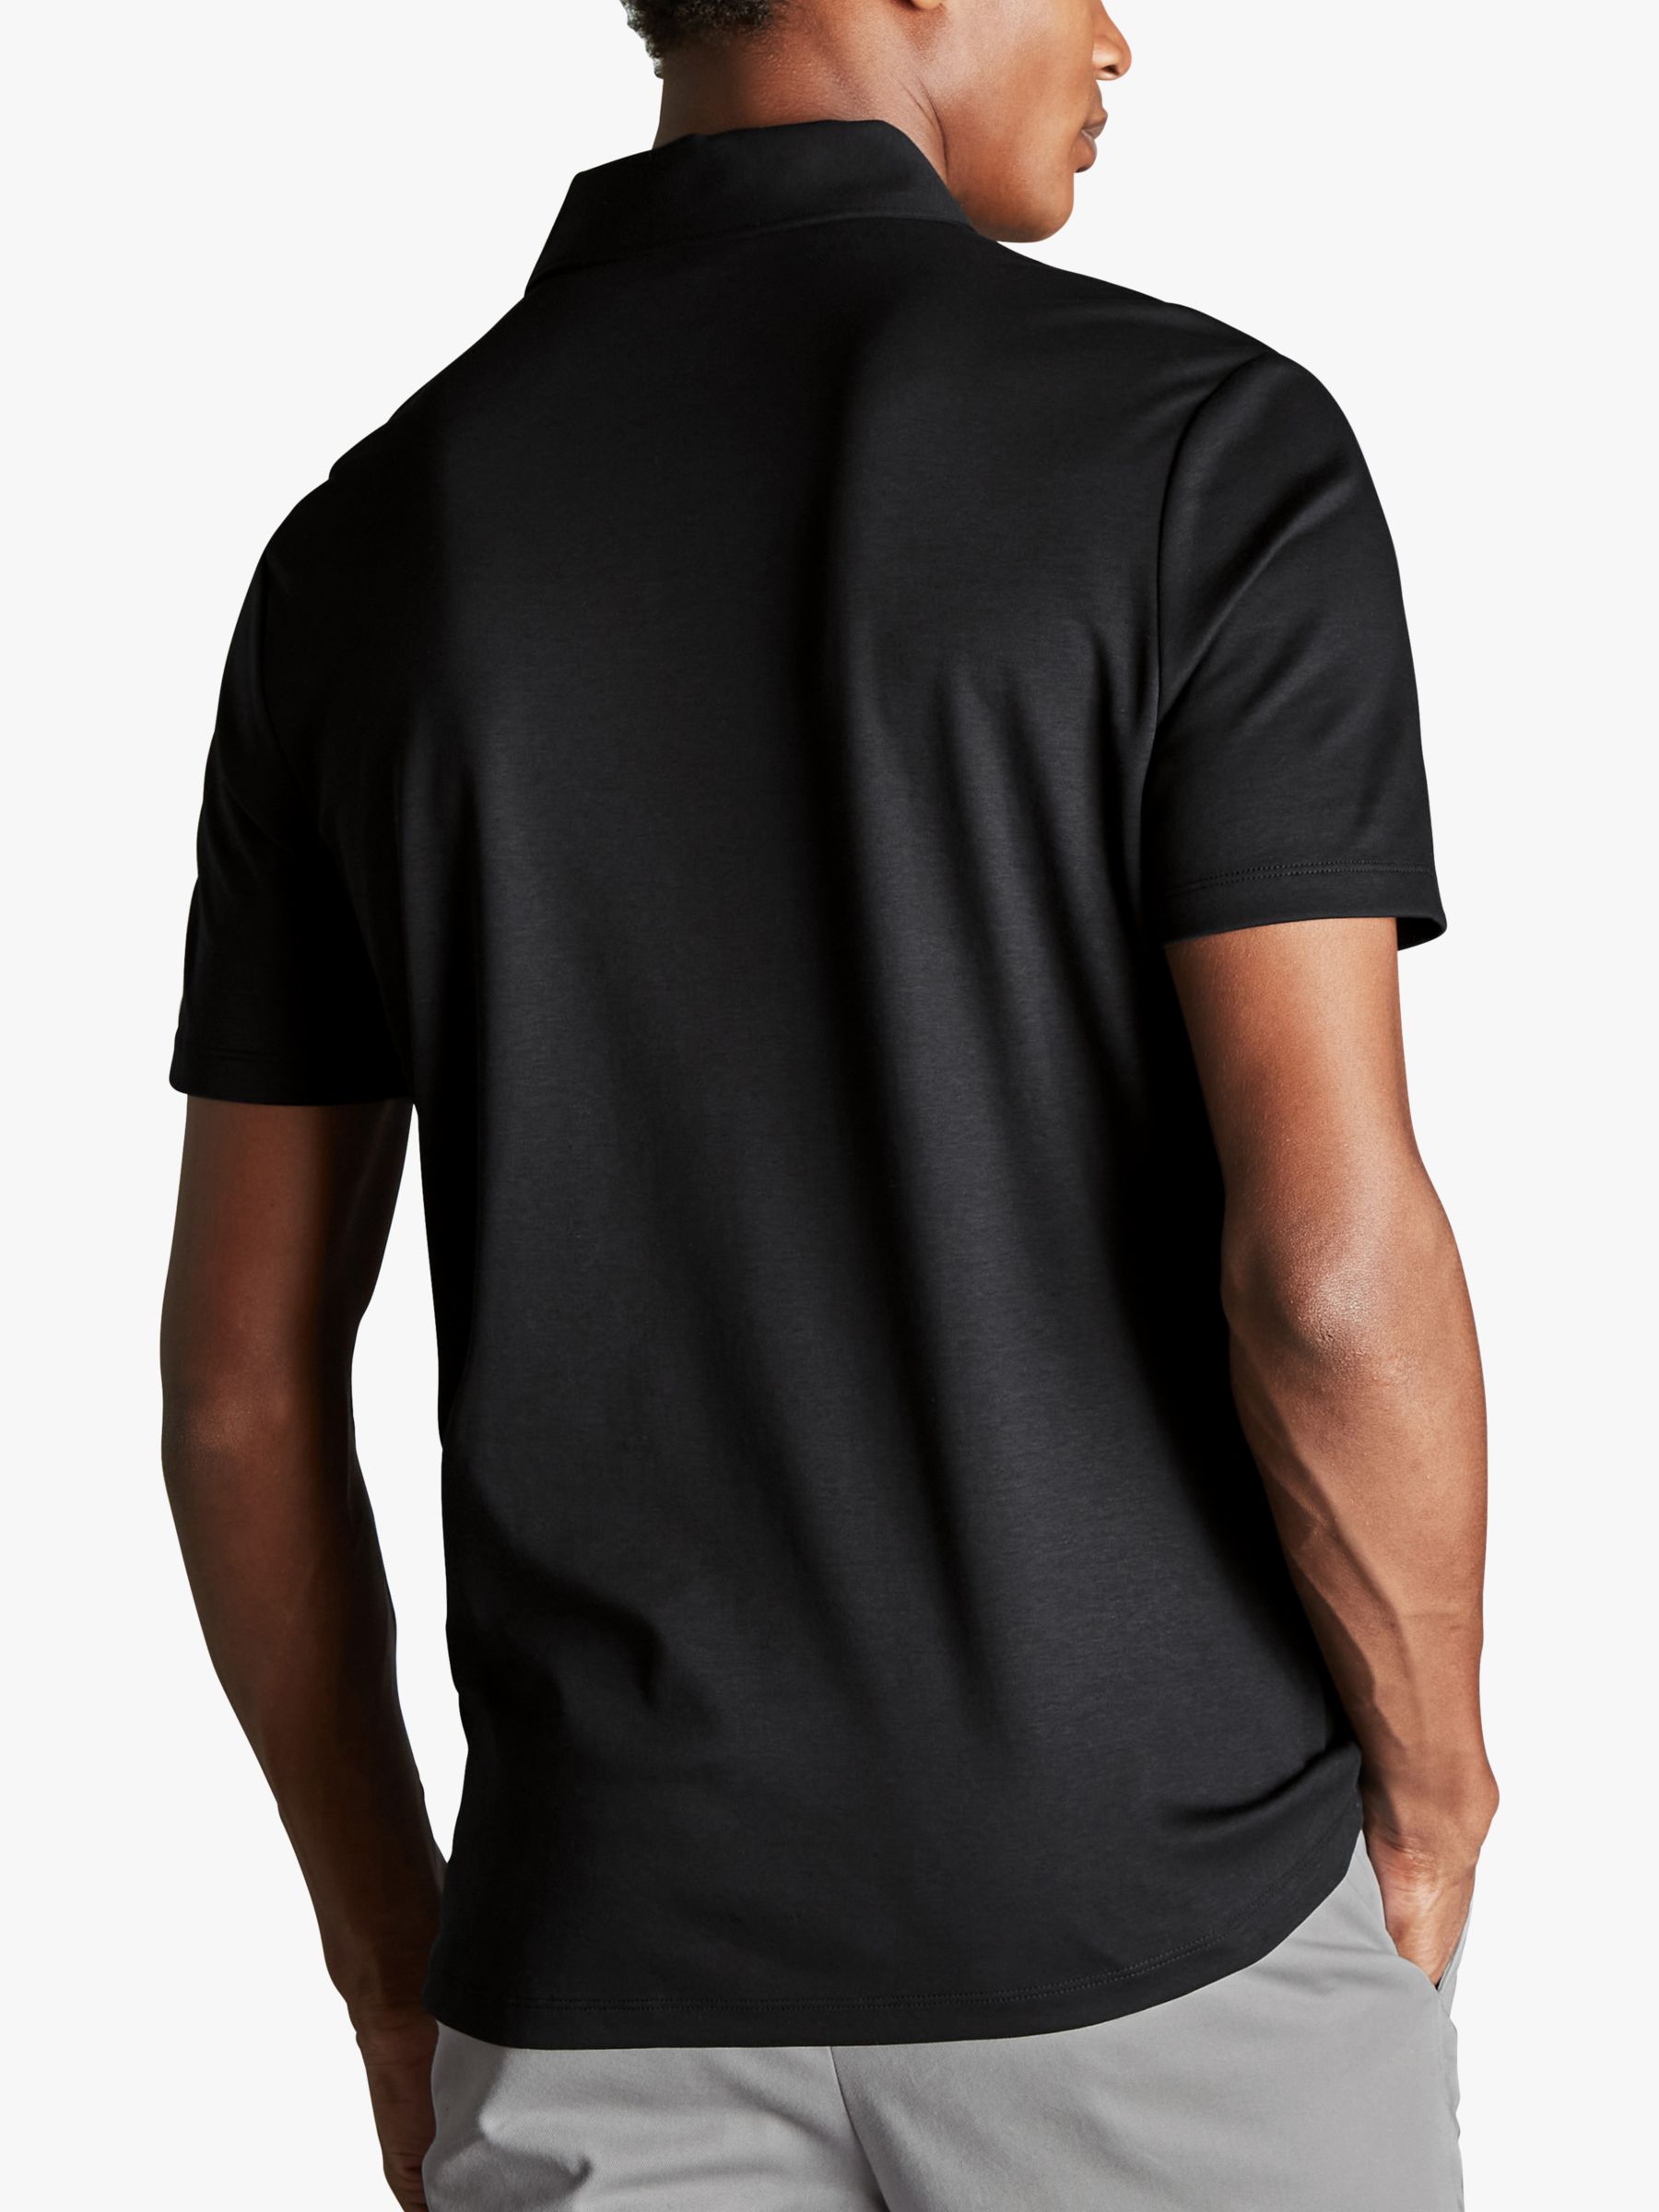 Charles Tyrwhitt Zip Neck Jersey Polo Shirt, Black at John Lewis & Partners